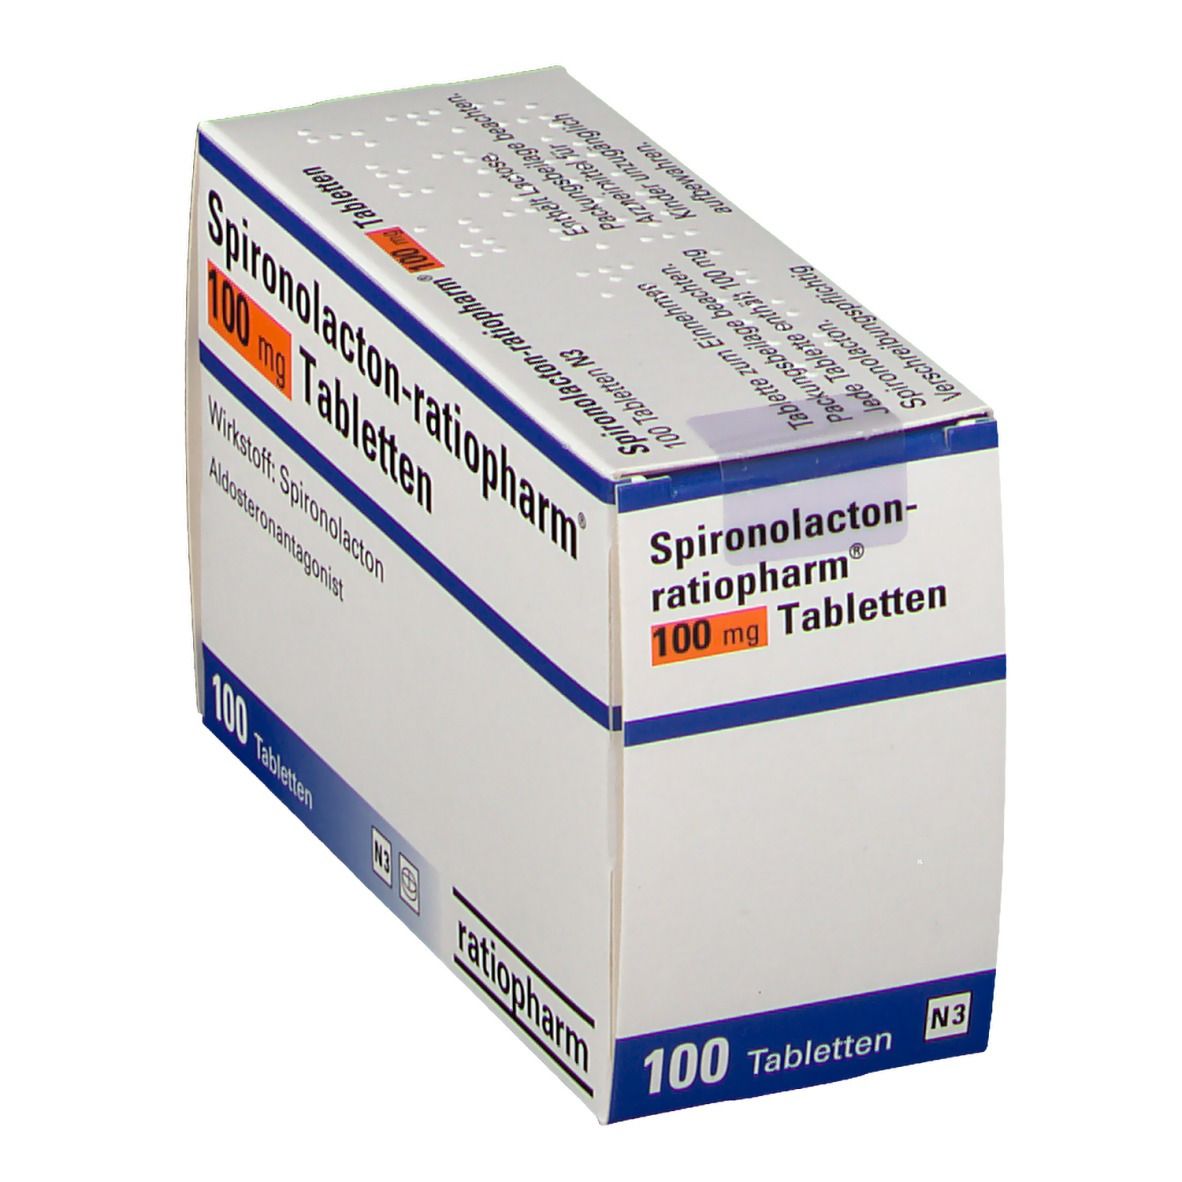 Spironolacton-ratiopharm® 100 mg